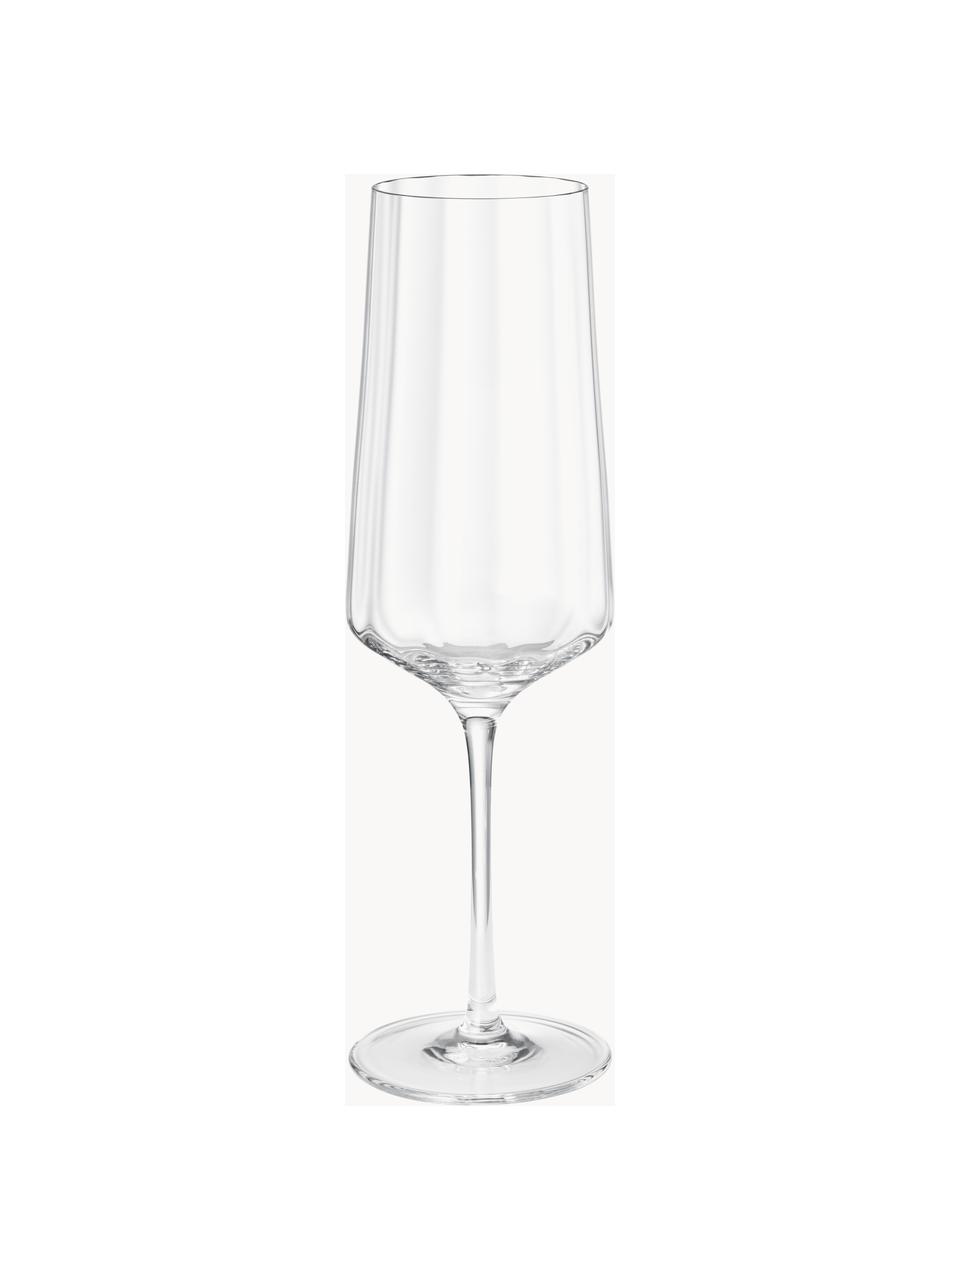 Kieliszek do szampana ze szkła kryształowego Bernadotte, 6 szt., Szkło kryształowe, Transparentny, Ø 7 x W 22 cm, 270 ml